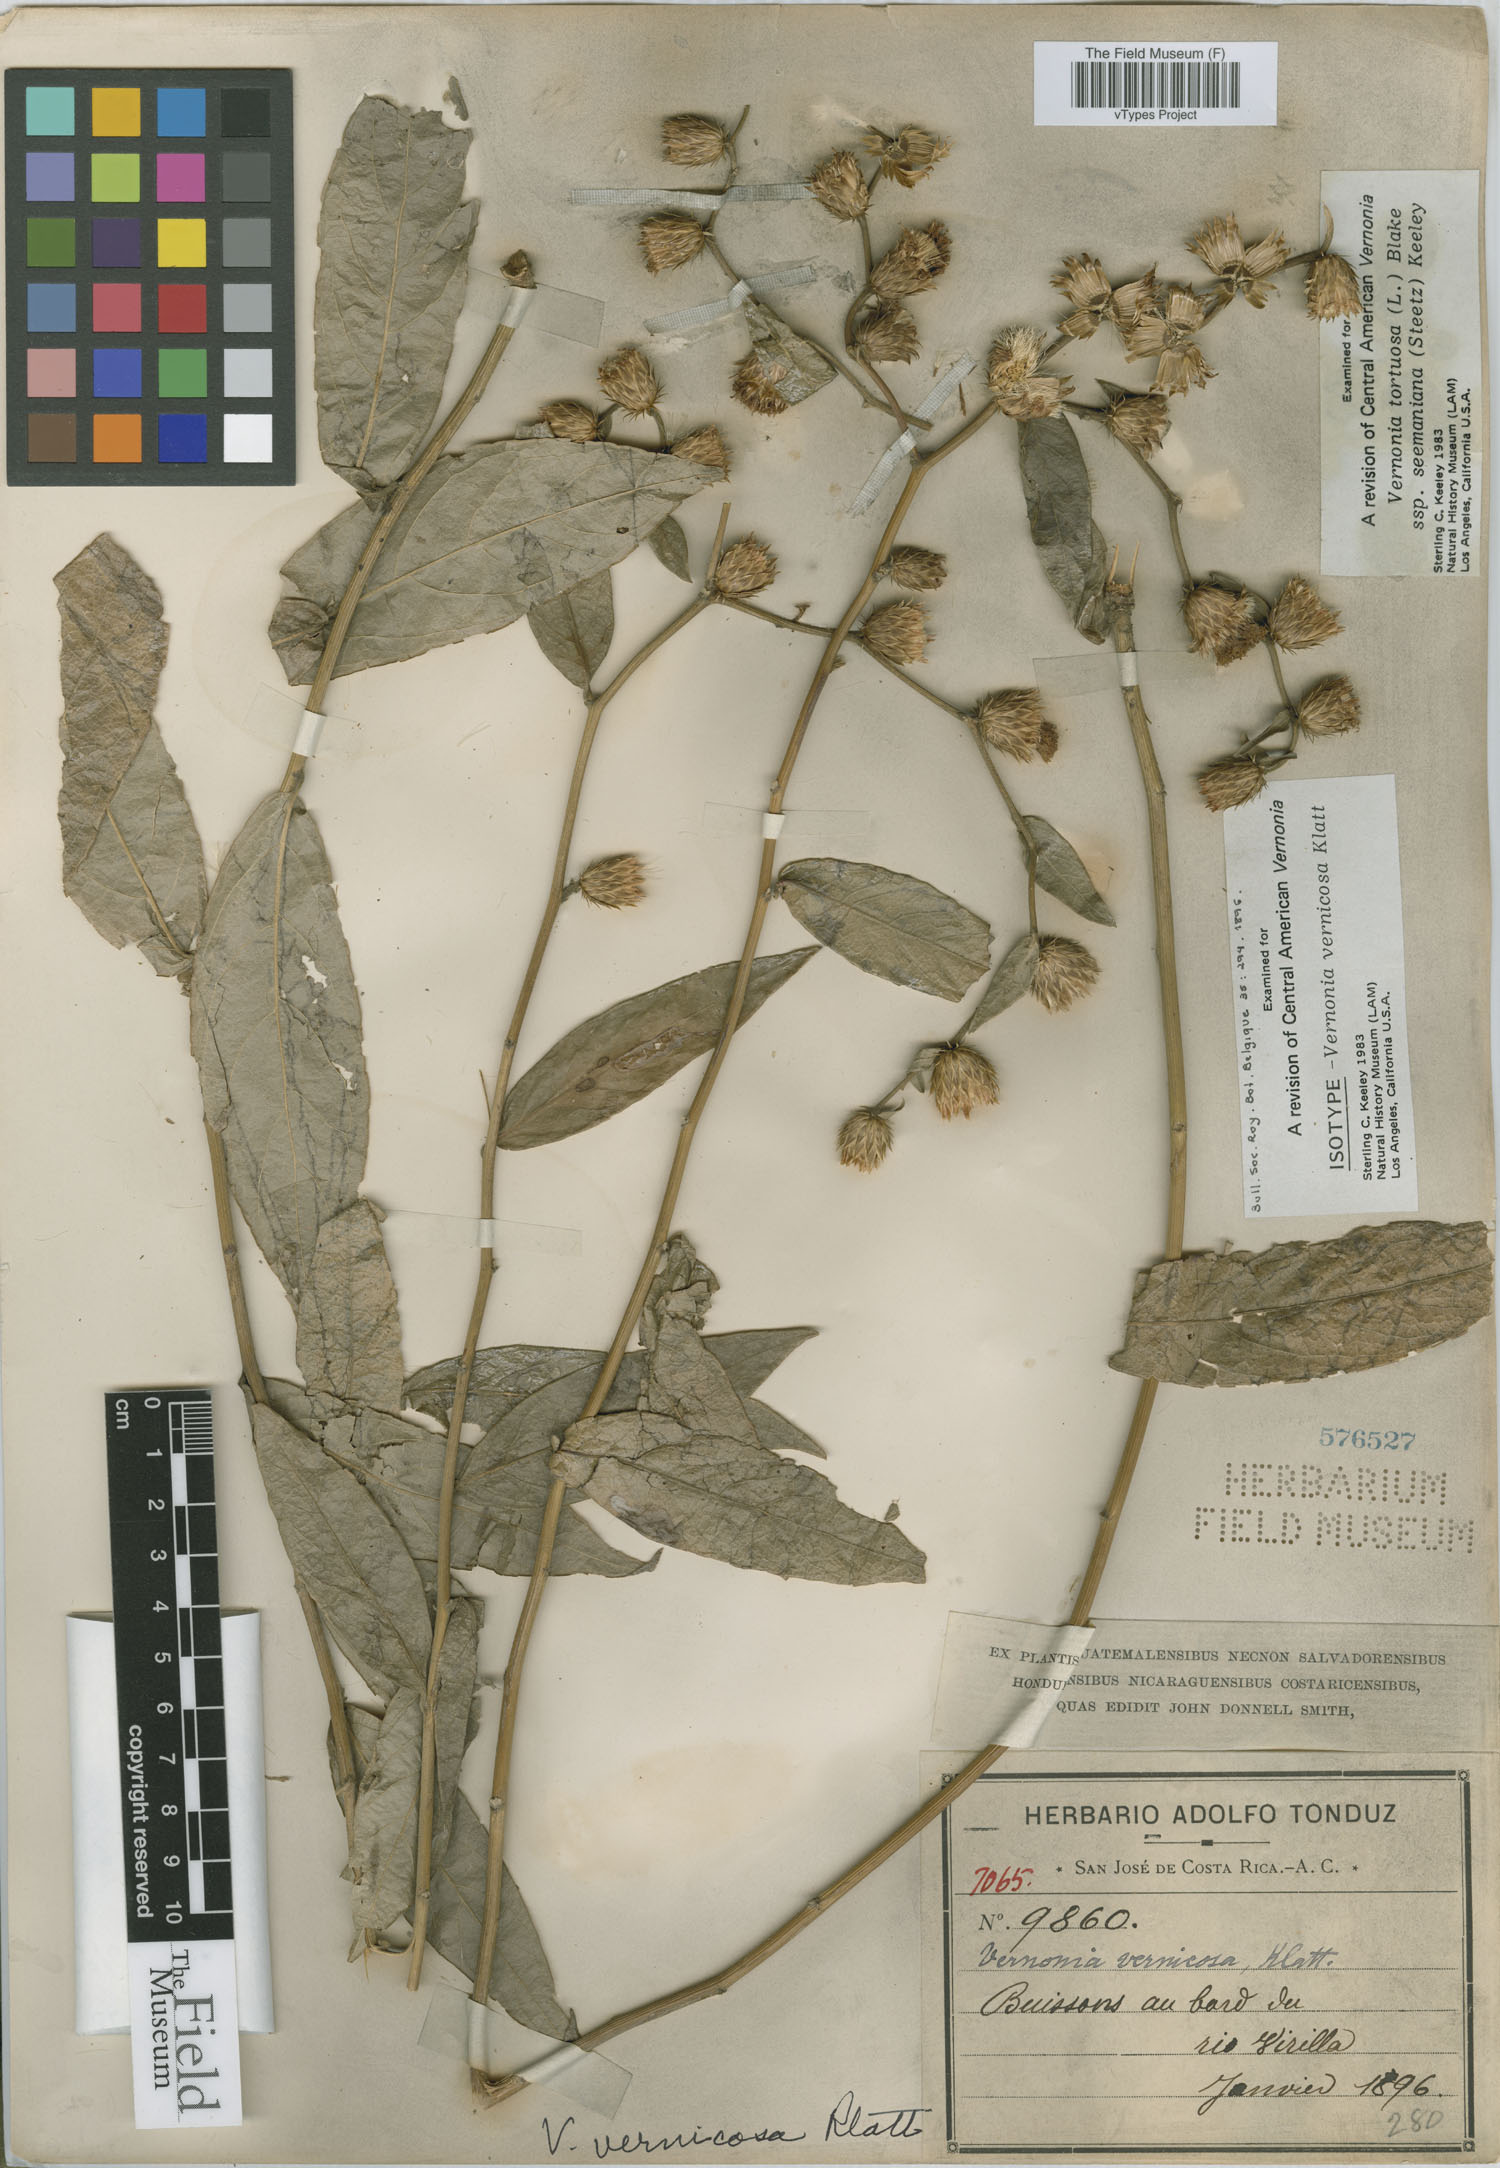 Vernonia image